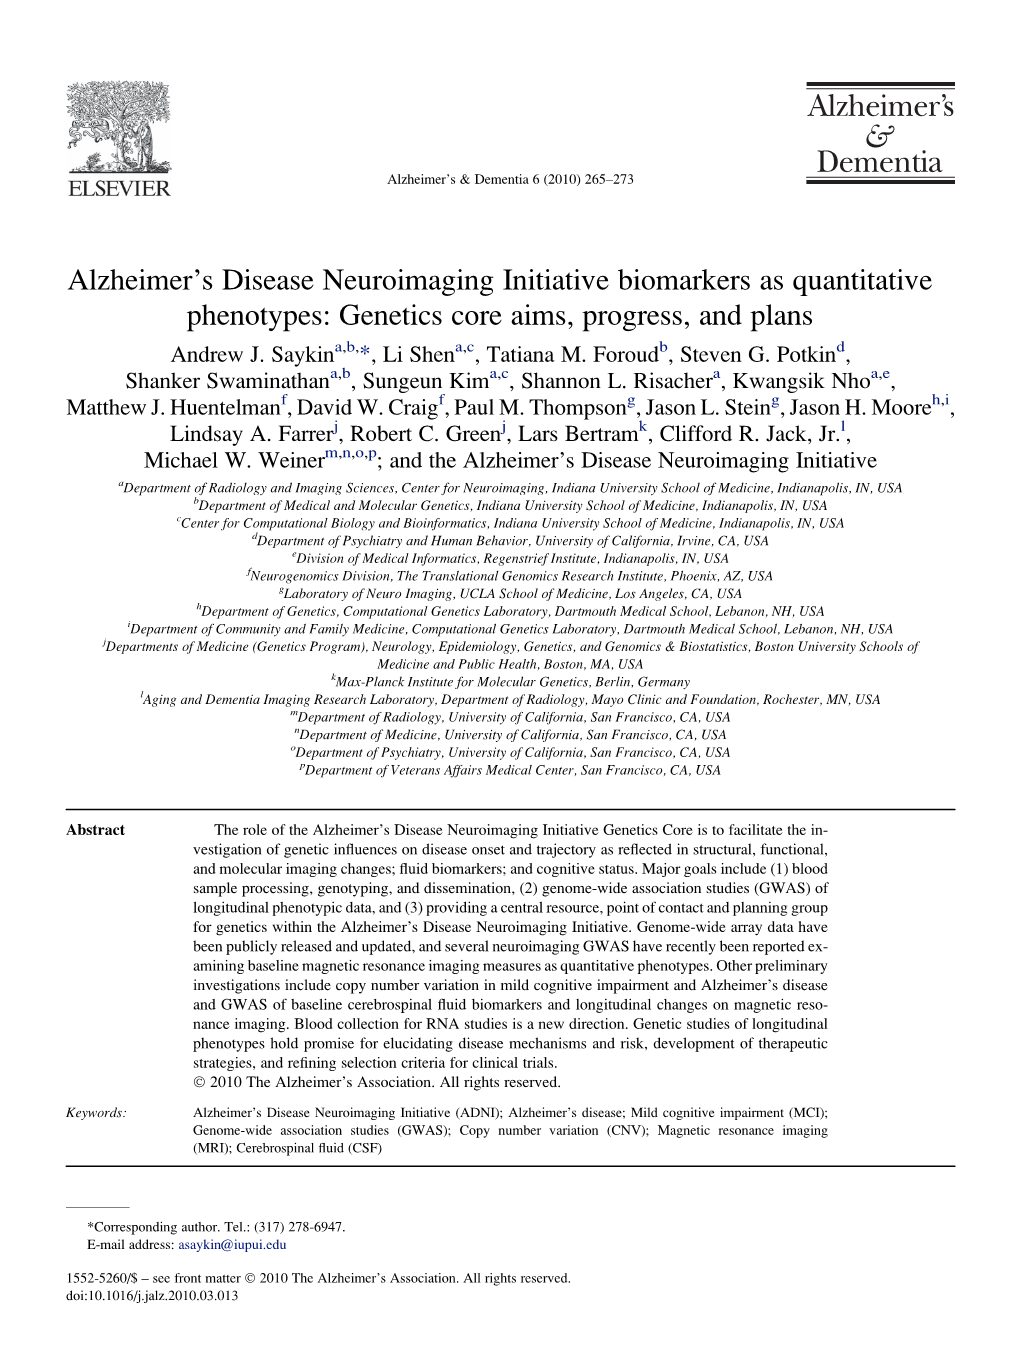 Alzheimer's Disease Neuroimaging Initiative Biomarkers As Quantitative